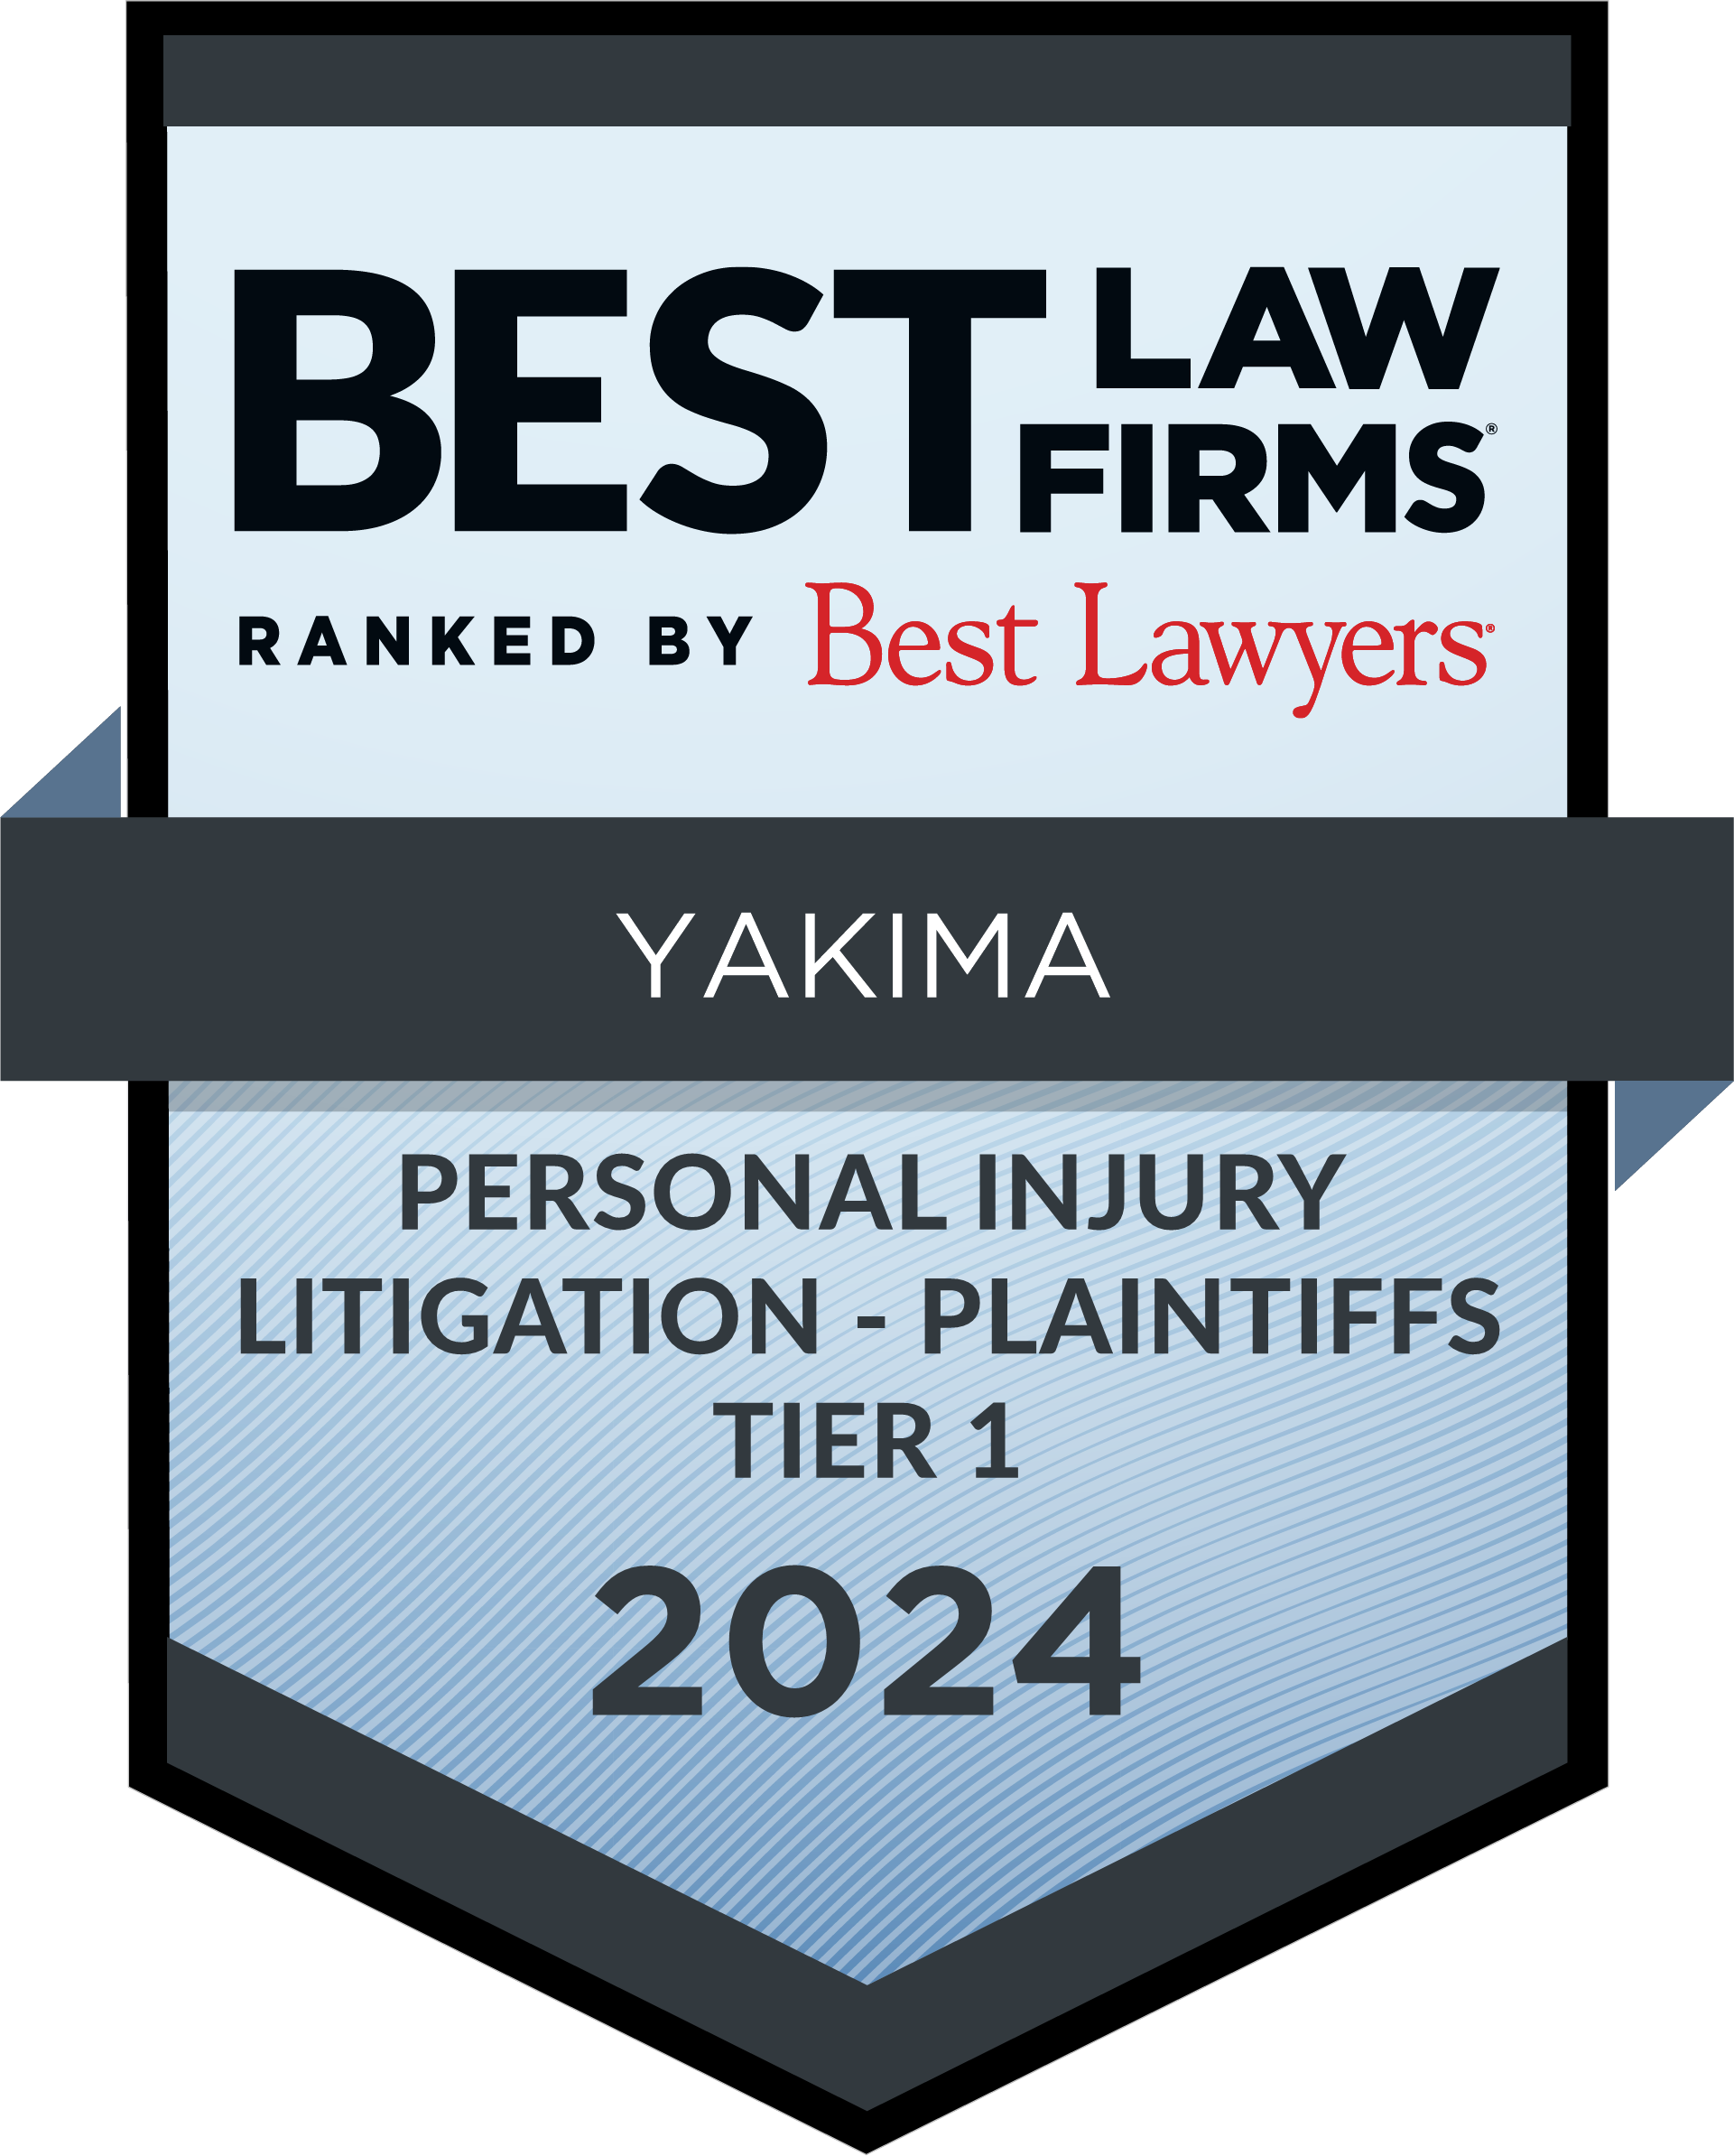 Best Law Firms Personal Injury Litigation - Plaintiffs 2024